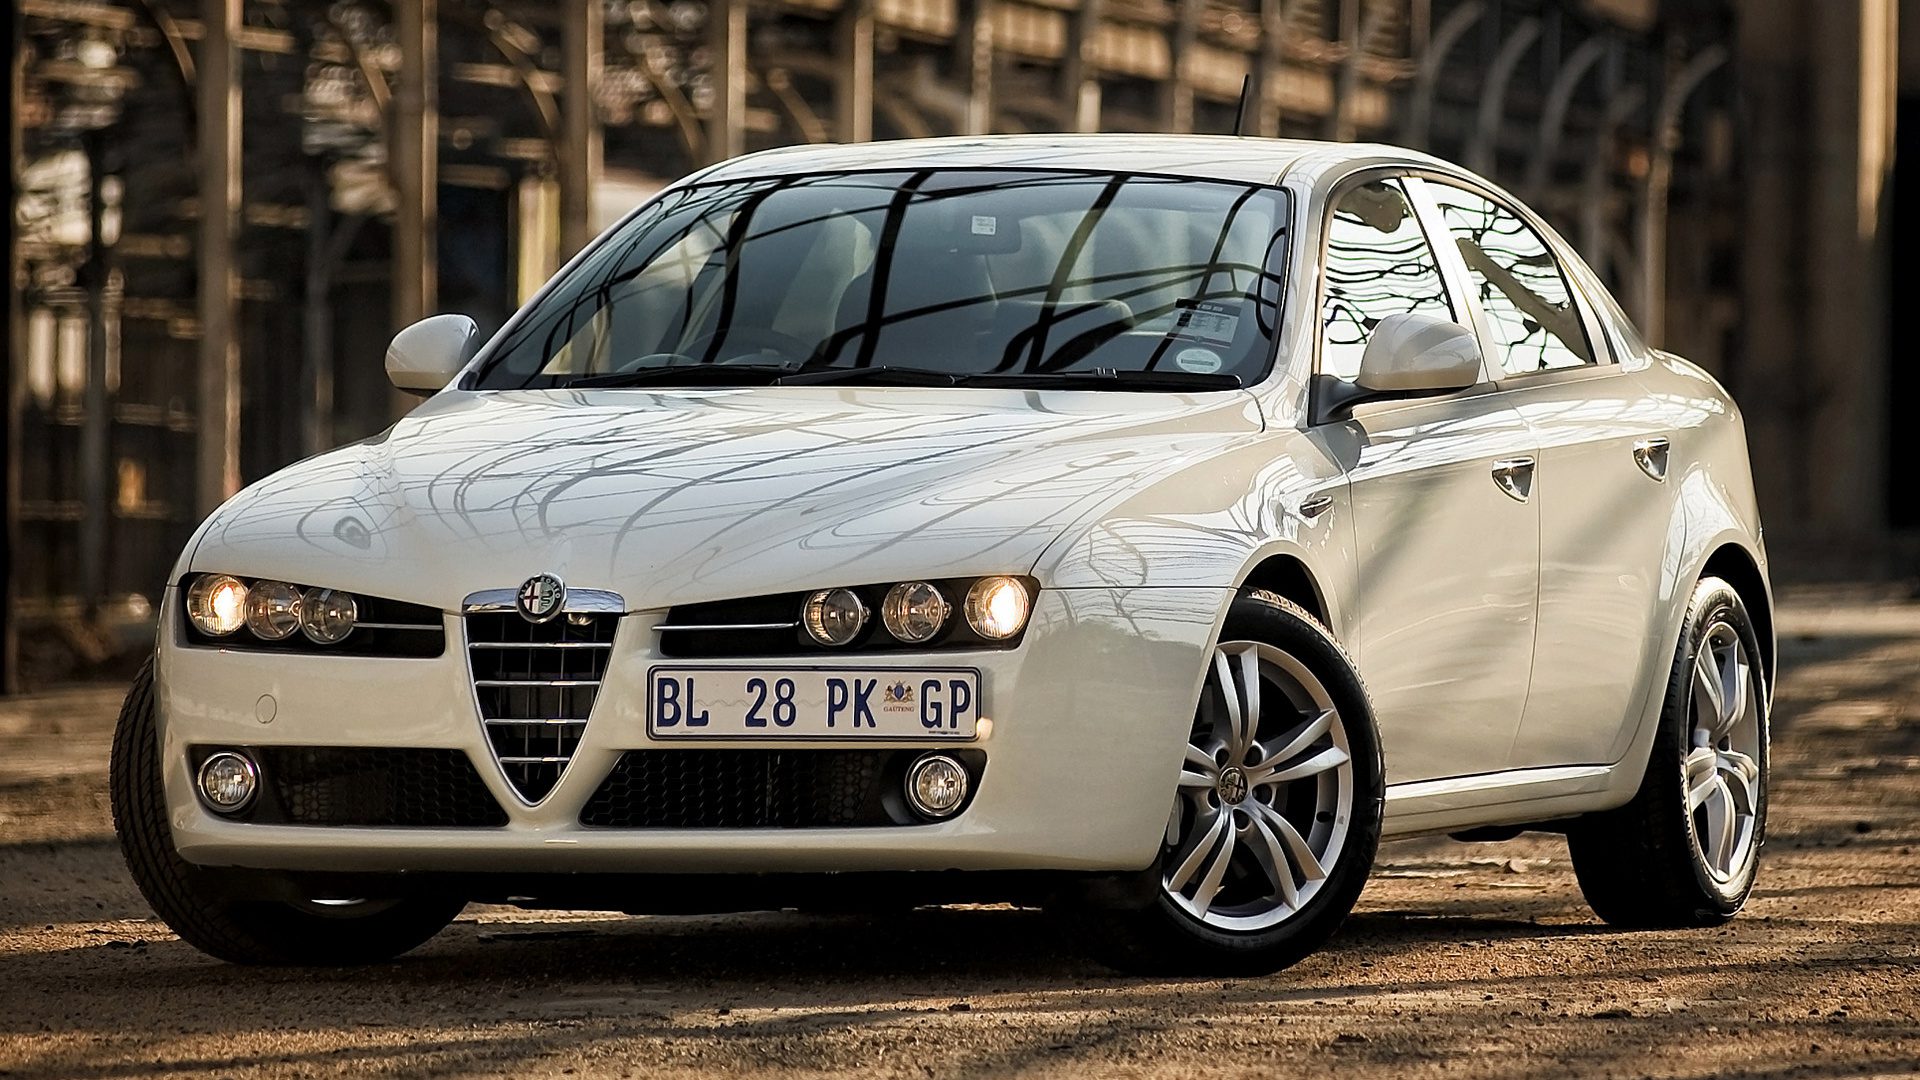 https://www.goodcarbadcar.net/wp-content/uploads/2015/05/Alfa-Romeo-159-Sales-Figures.jpg